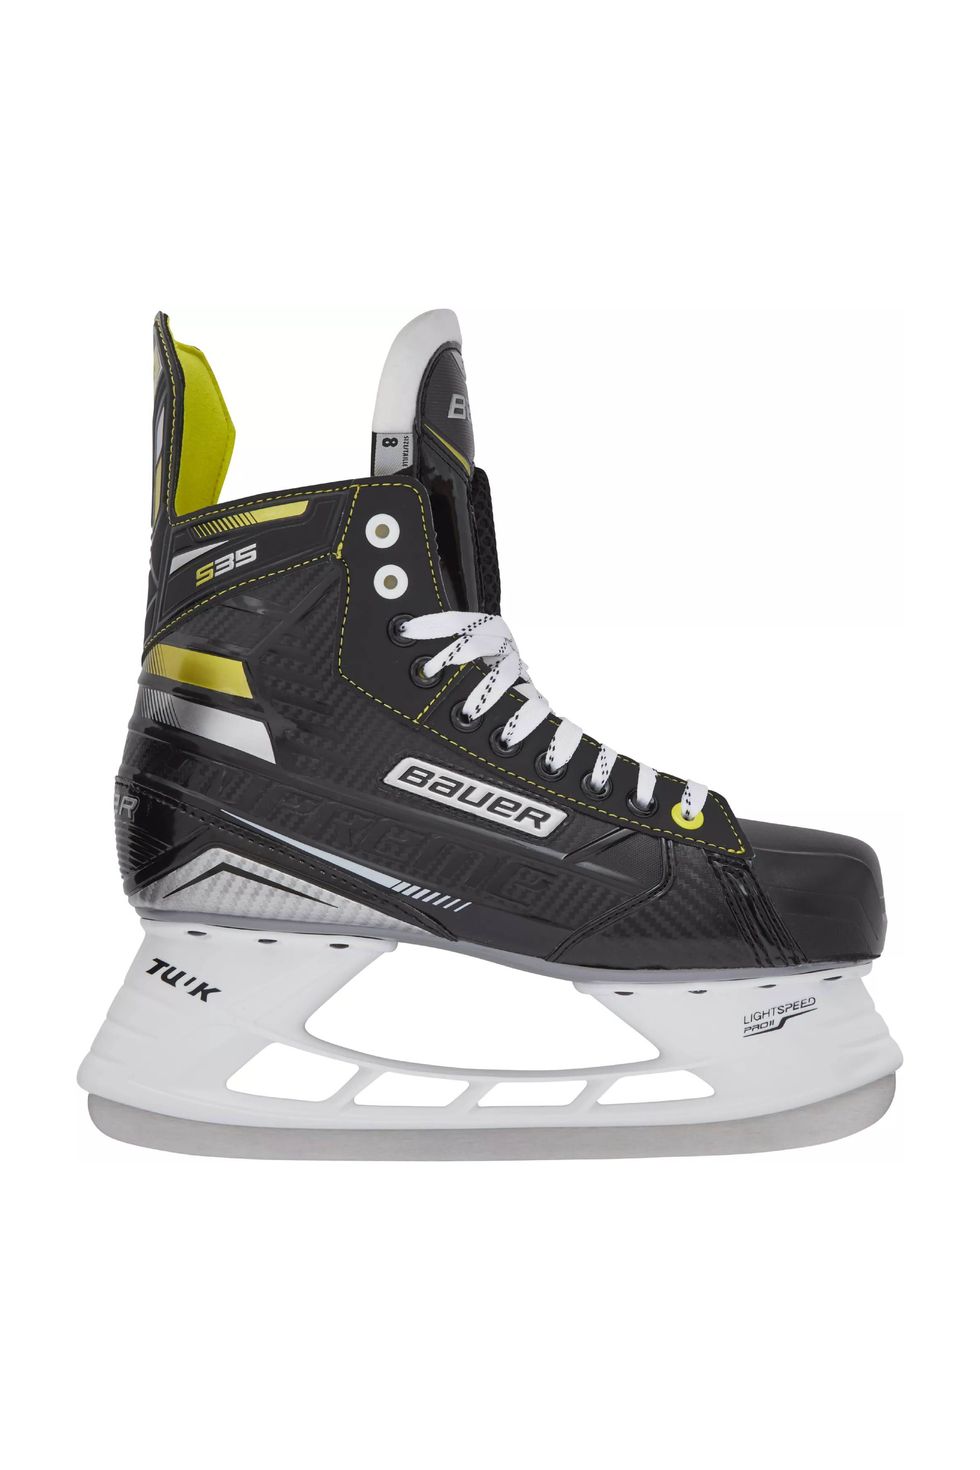 Supreme S35 Hockey Skates